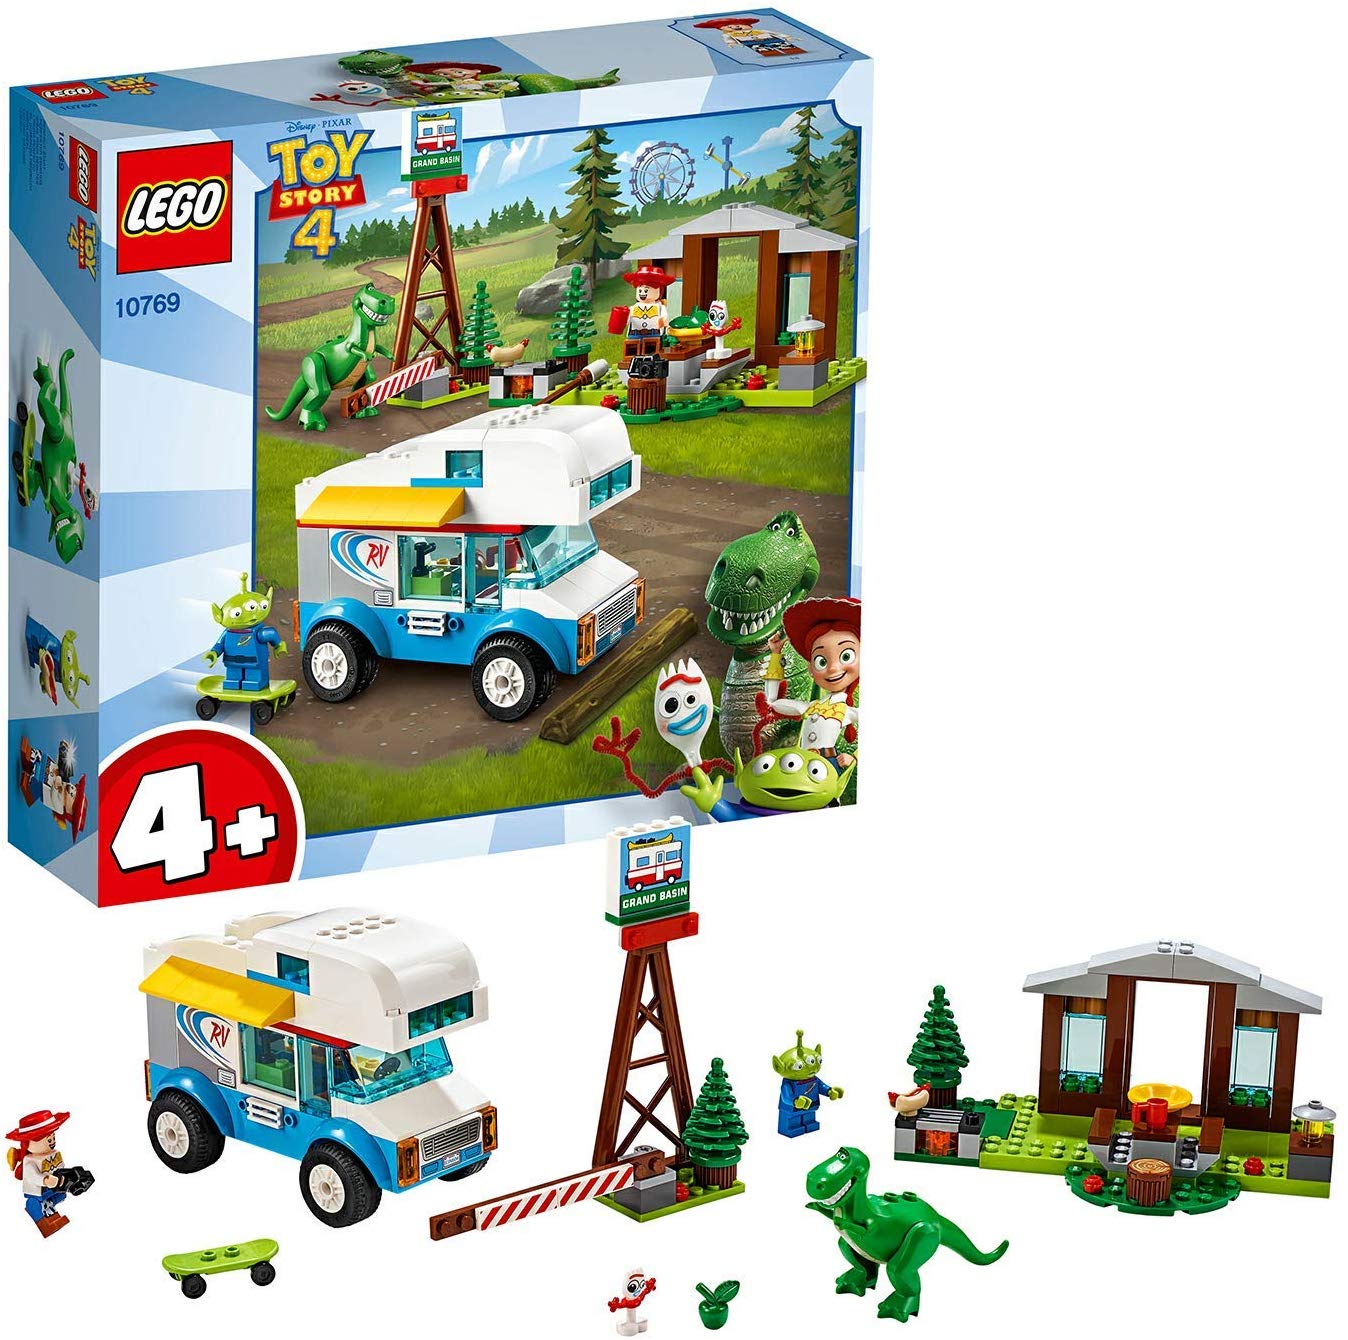 LEGO Disney Pixar’s Toy Story 4 Lego Juniors 10769 Missing Product Title, Multi-Colour